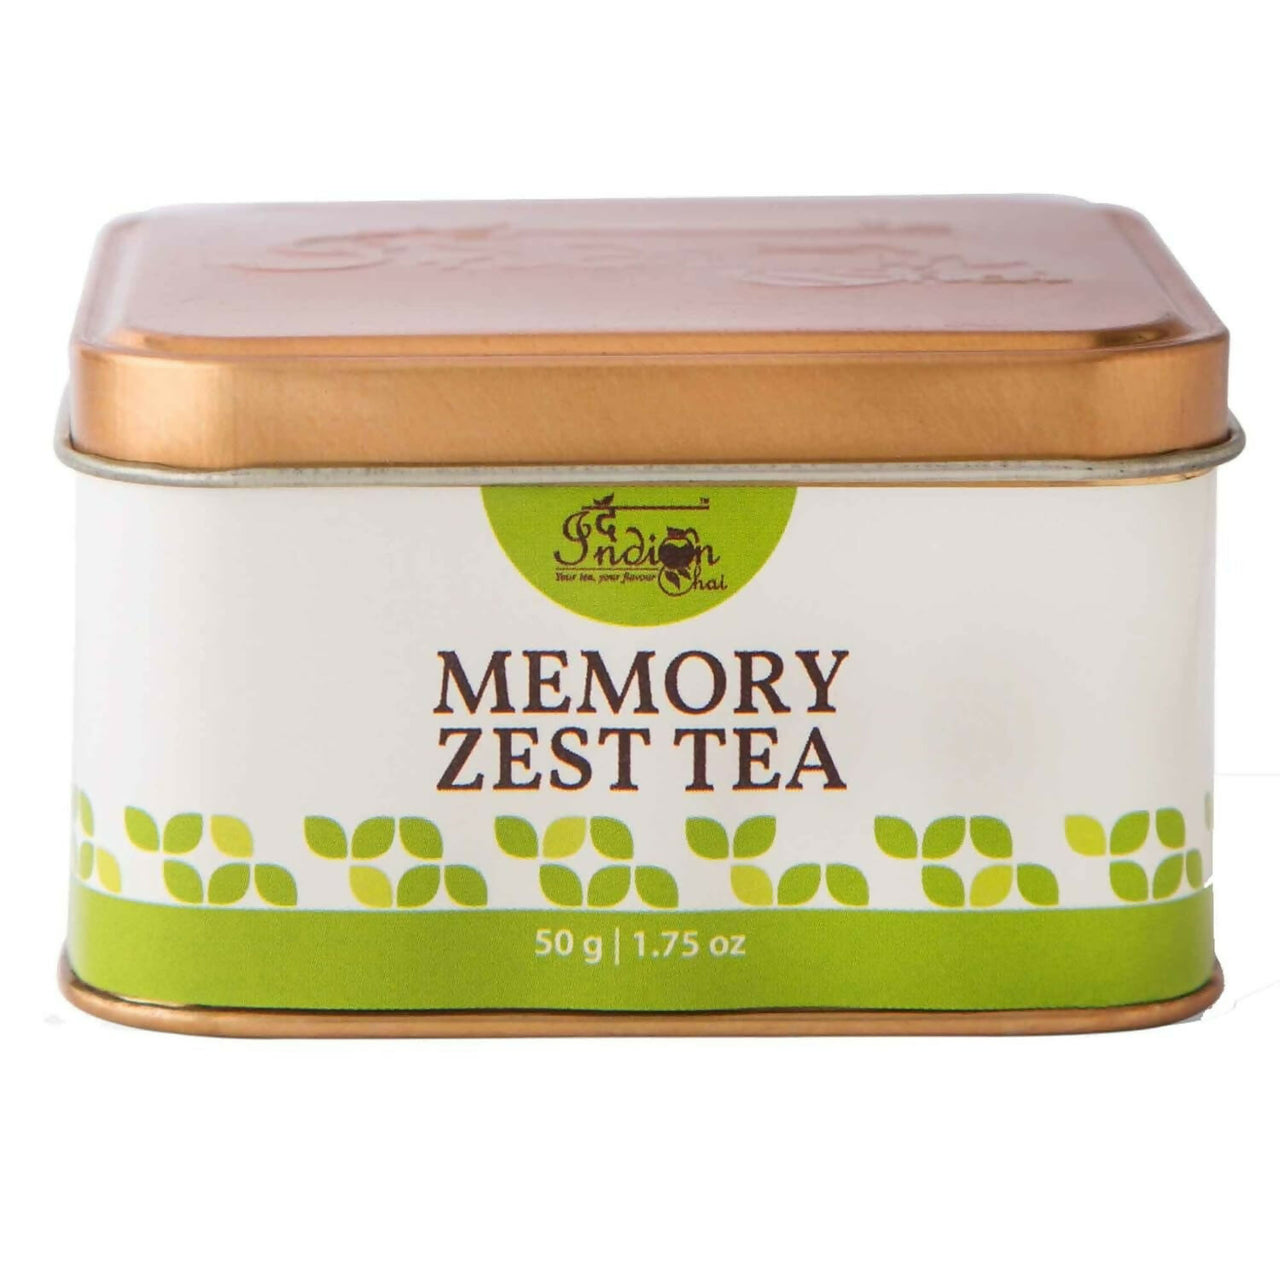 The Indian Chai - Memory Zest Tea - Distacart